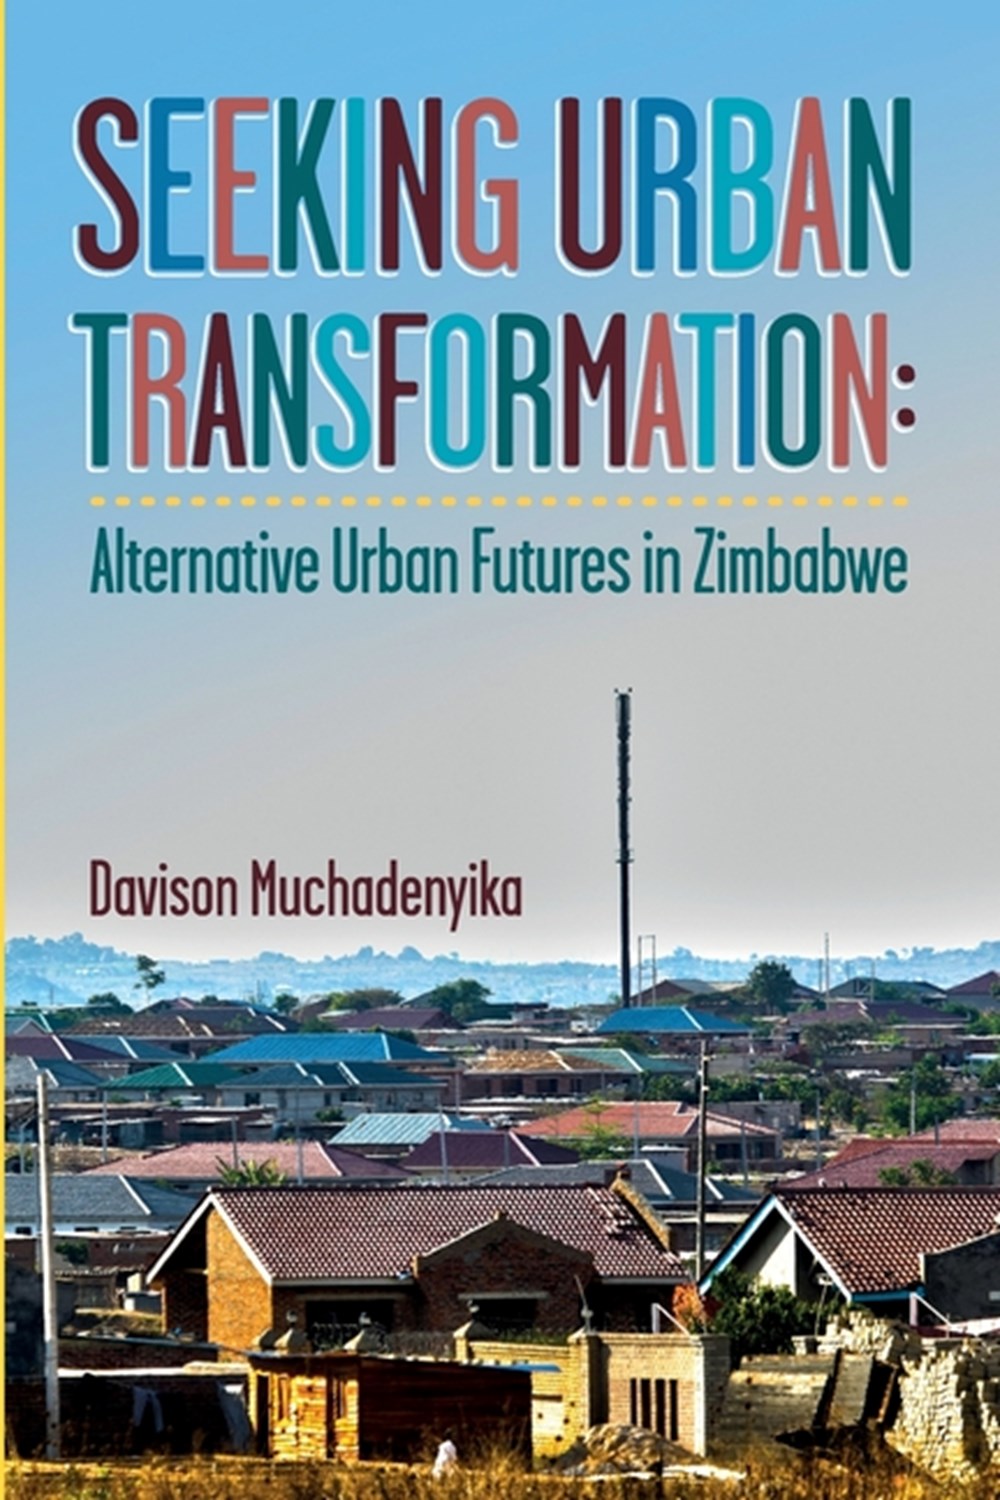 Seeking Urban Transformation: Alternative Urban Futures in Zimbabwe